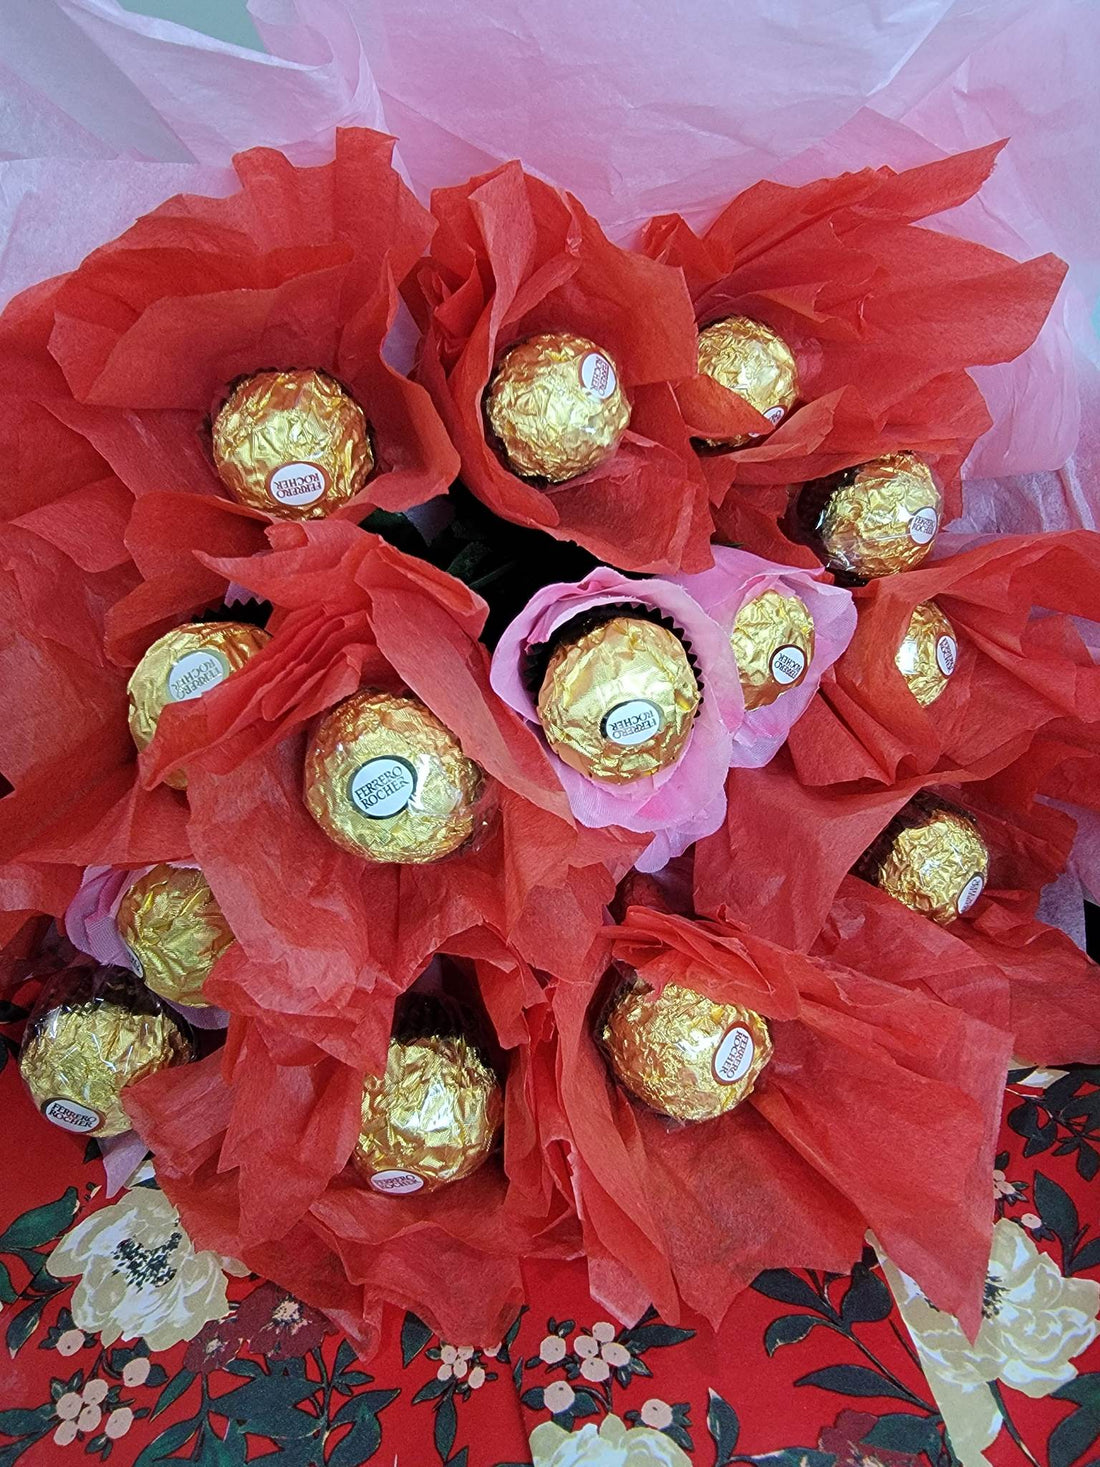 Ferrero Rocher Chocolate Bouquet Gift - Giftly Treats